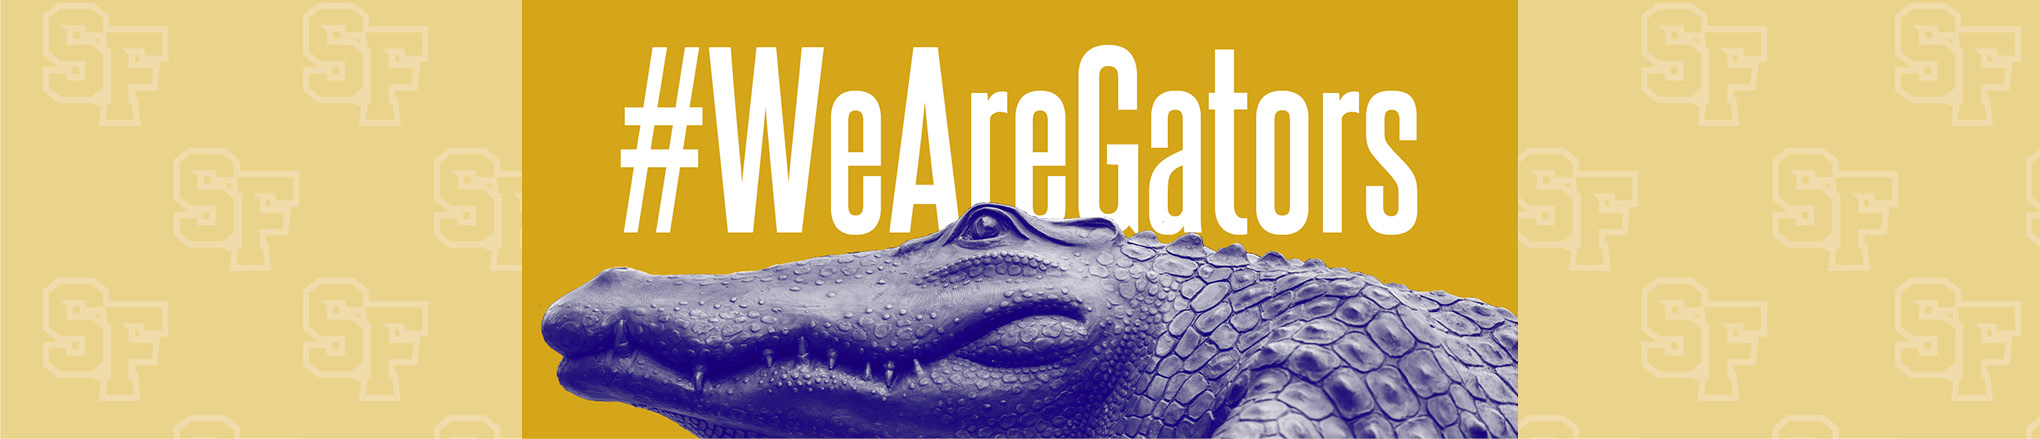 We are Gators Banner